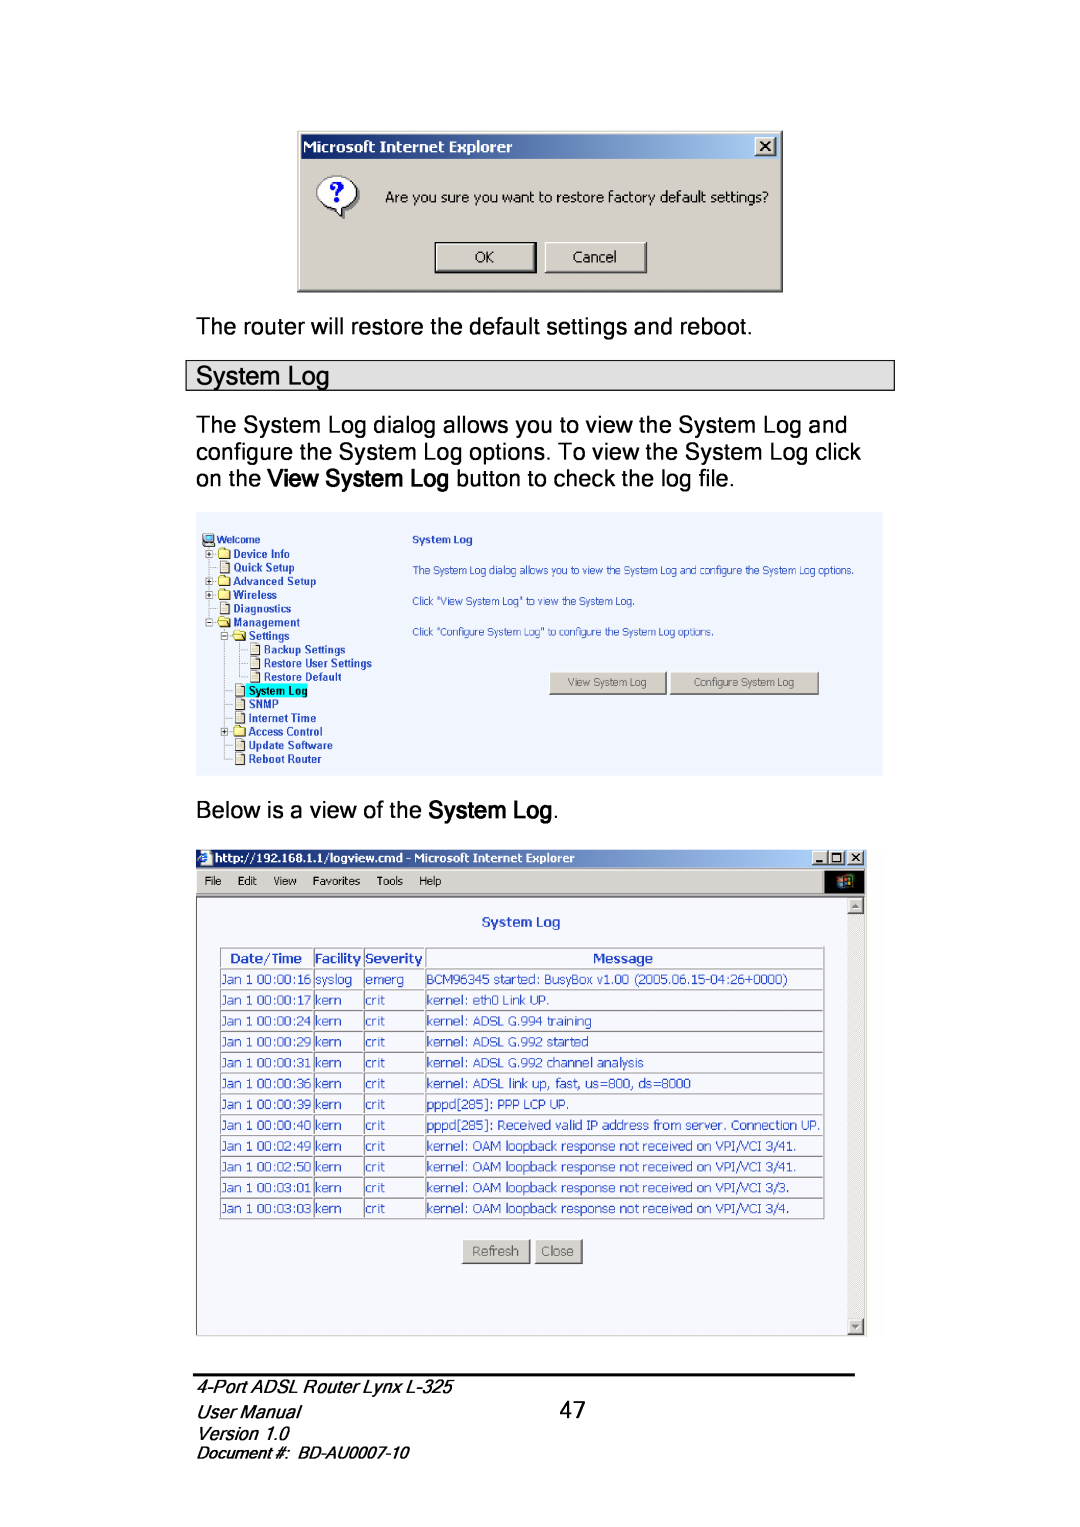 Lynx user manual System Log, Port ADSL Router Lynx L-325, User Manual, Version, Document # BD-AU0007-10 